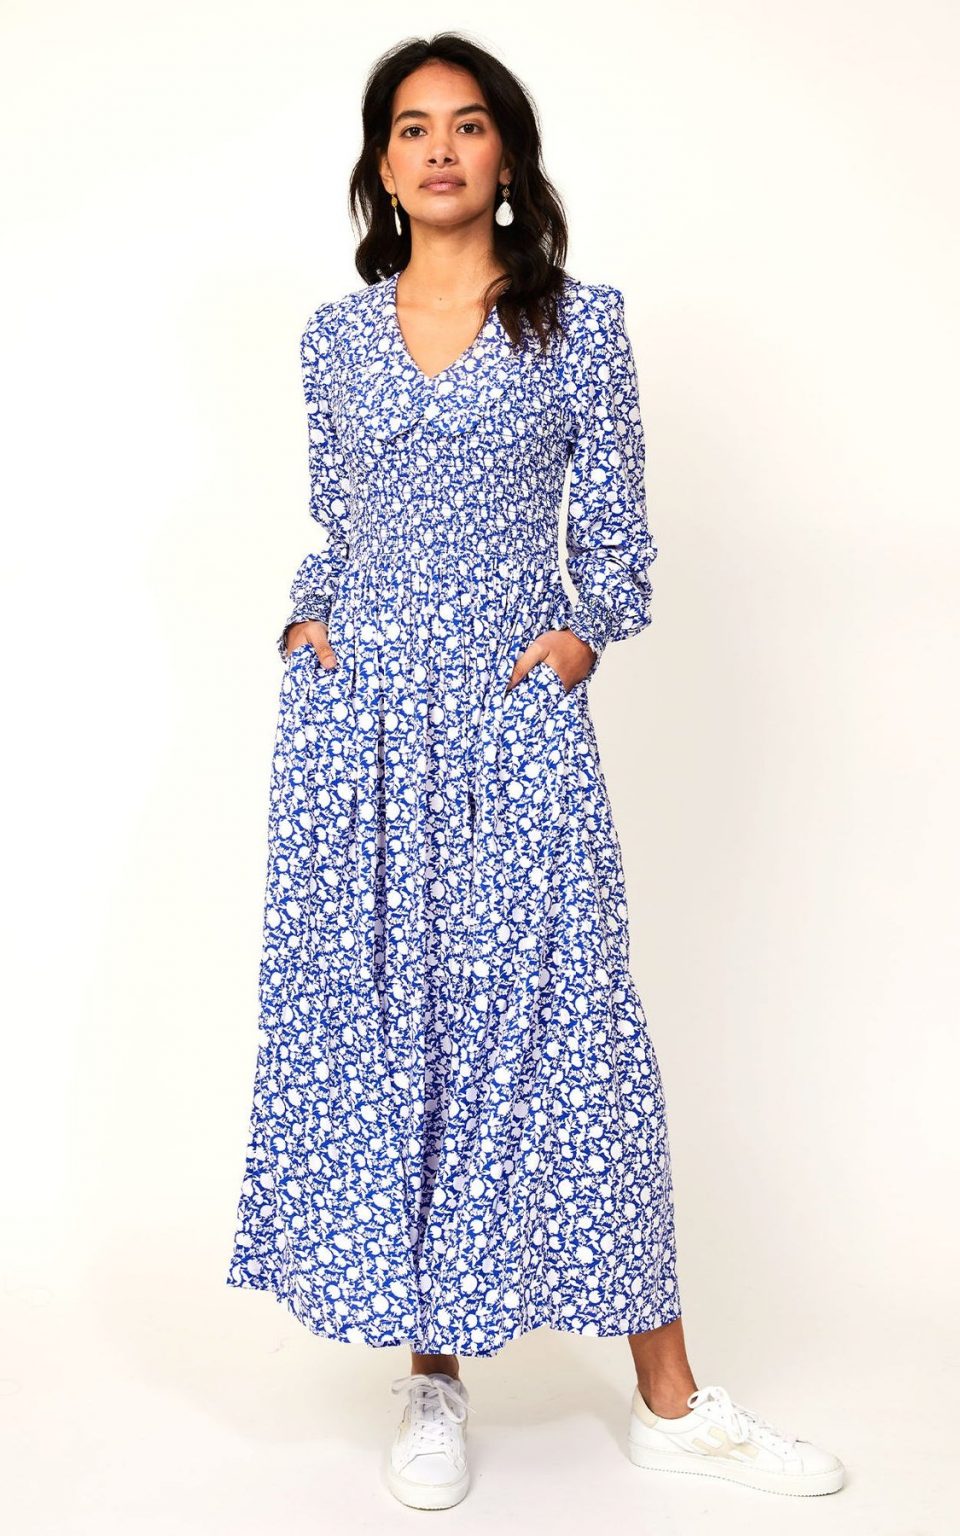 Kate Middleton's Alessandra Rich Azure Blue Polka Dot Dress